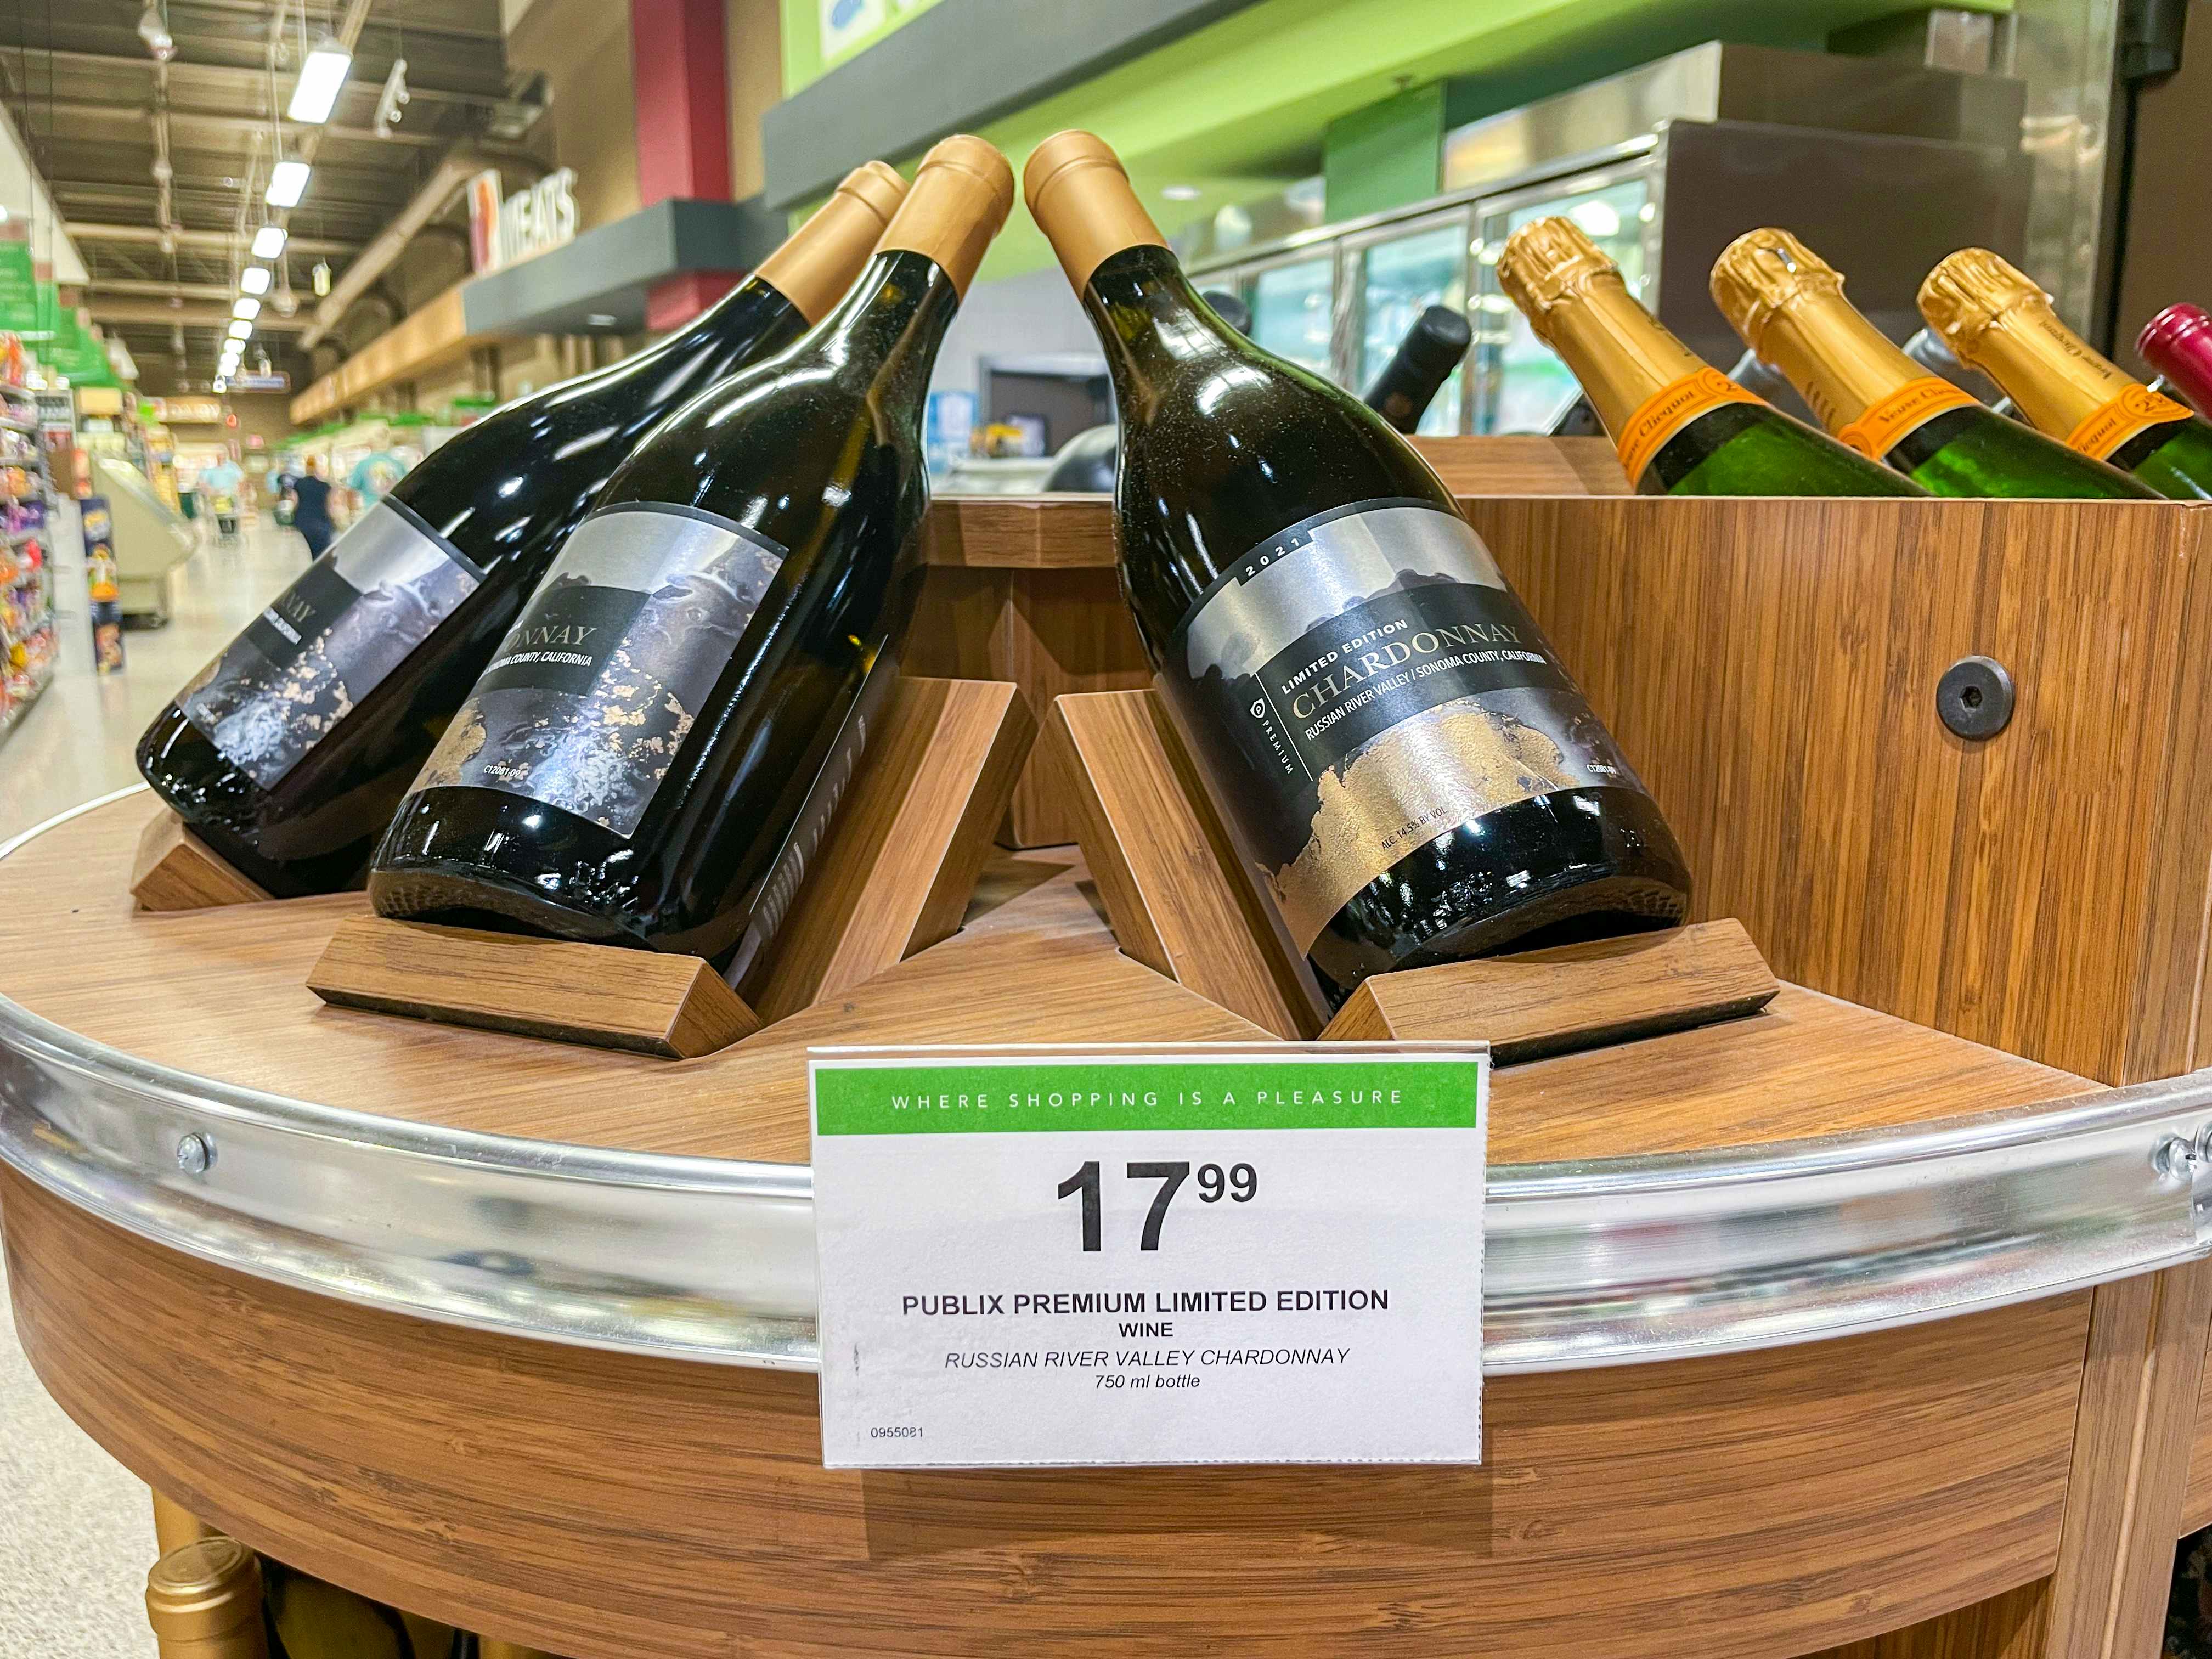 A Publix premium wine display